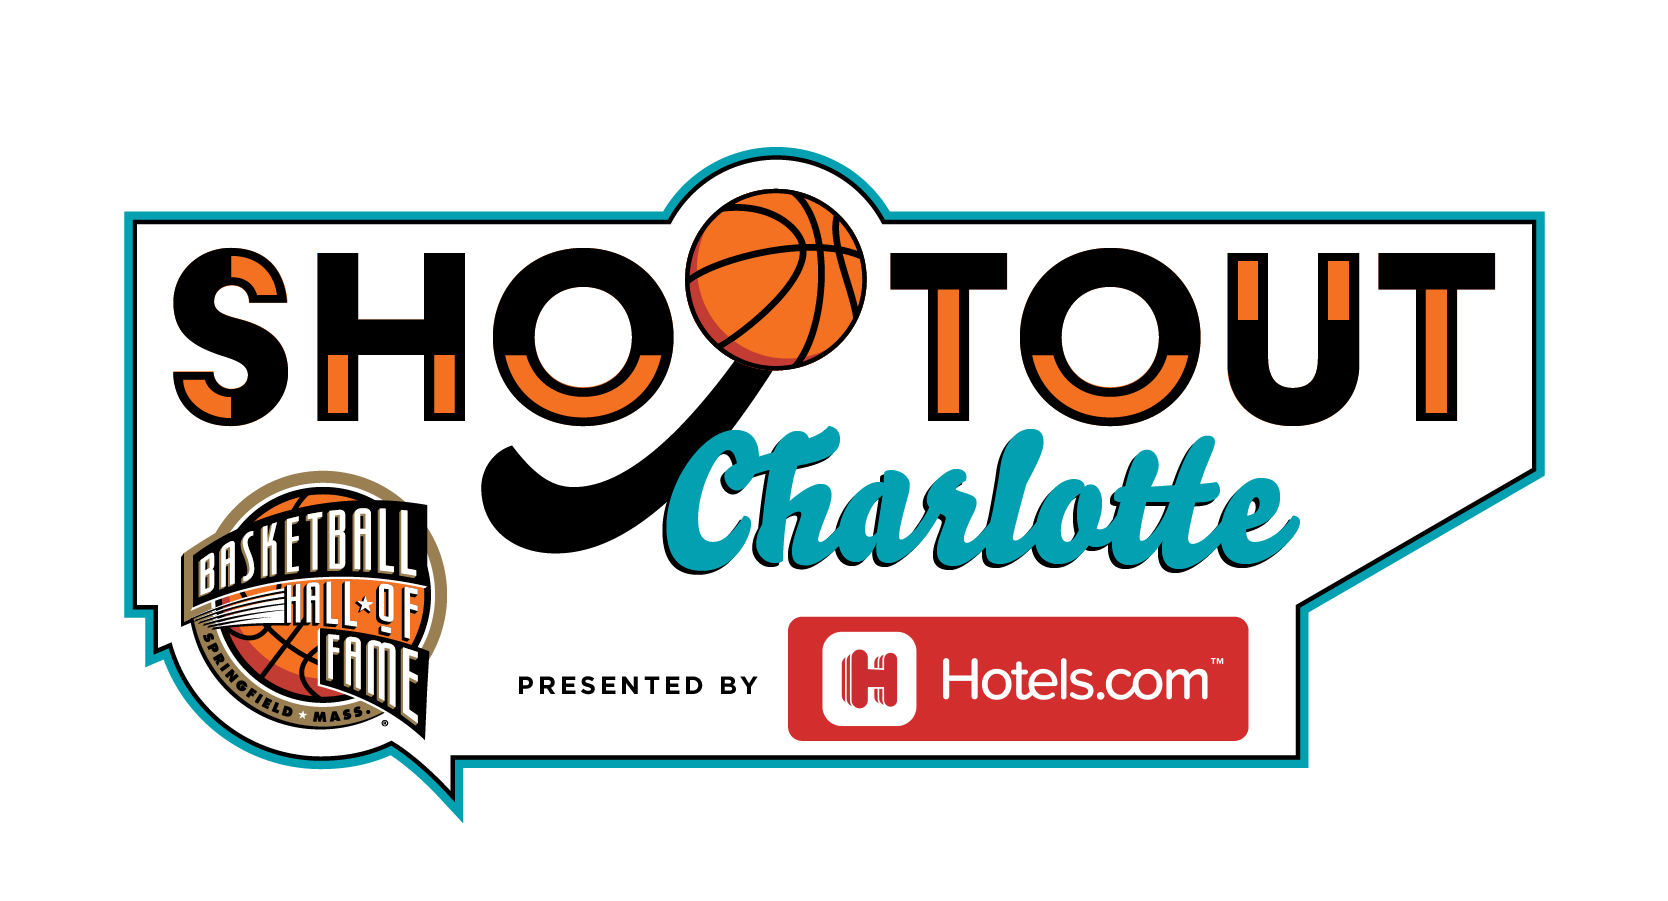 Basketball Hall of Fame Shootout Event Logo